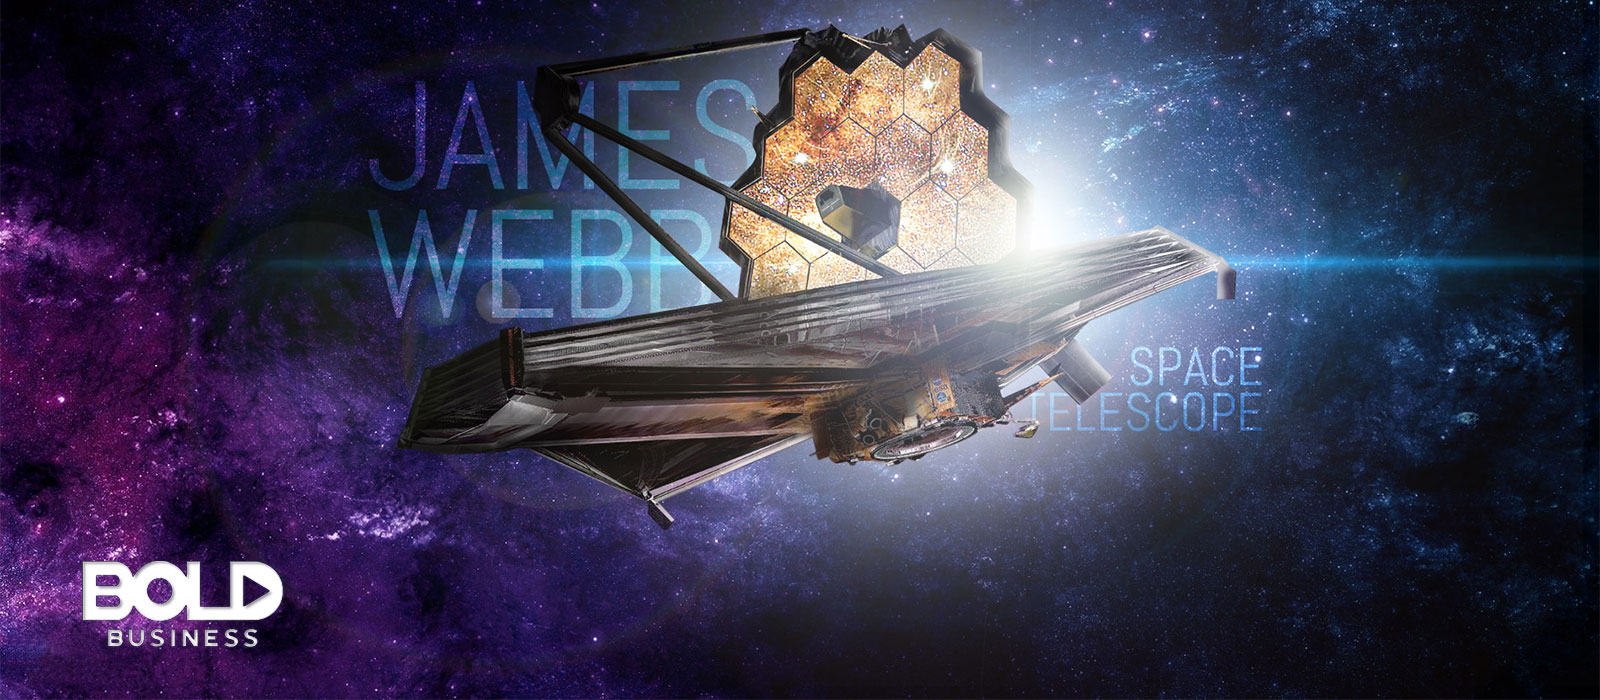 James Webb telescope launch revealed